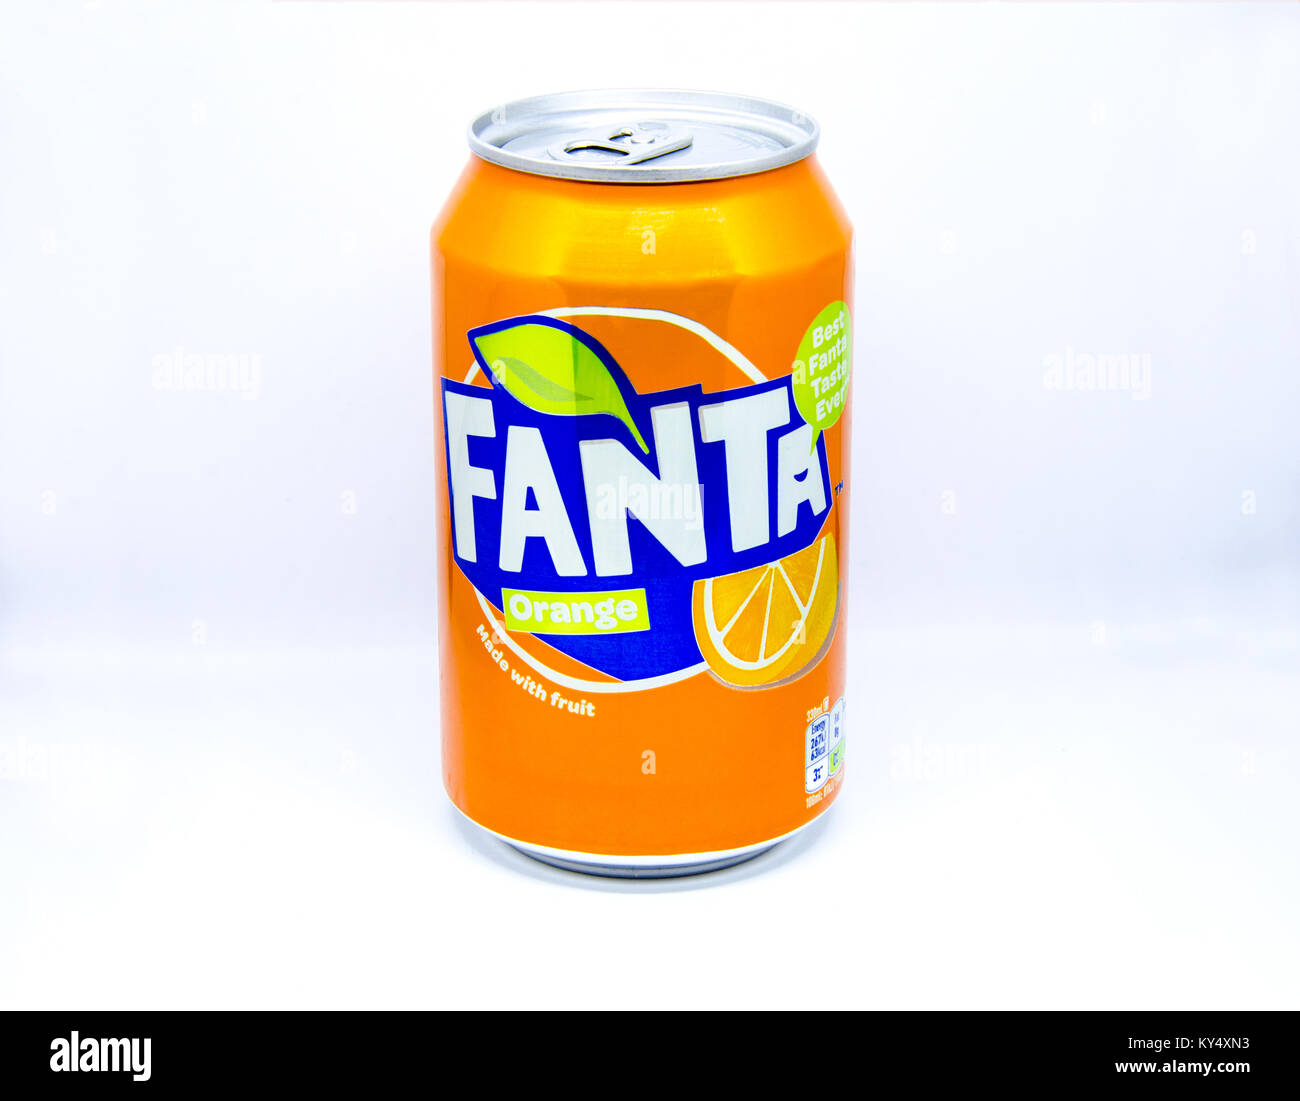 FANTA ORANGE LEMON FRUIT TWIST 330ml Pack of 24 Cans Soft Drink Can Fizzy  Drink